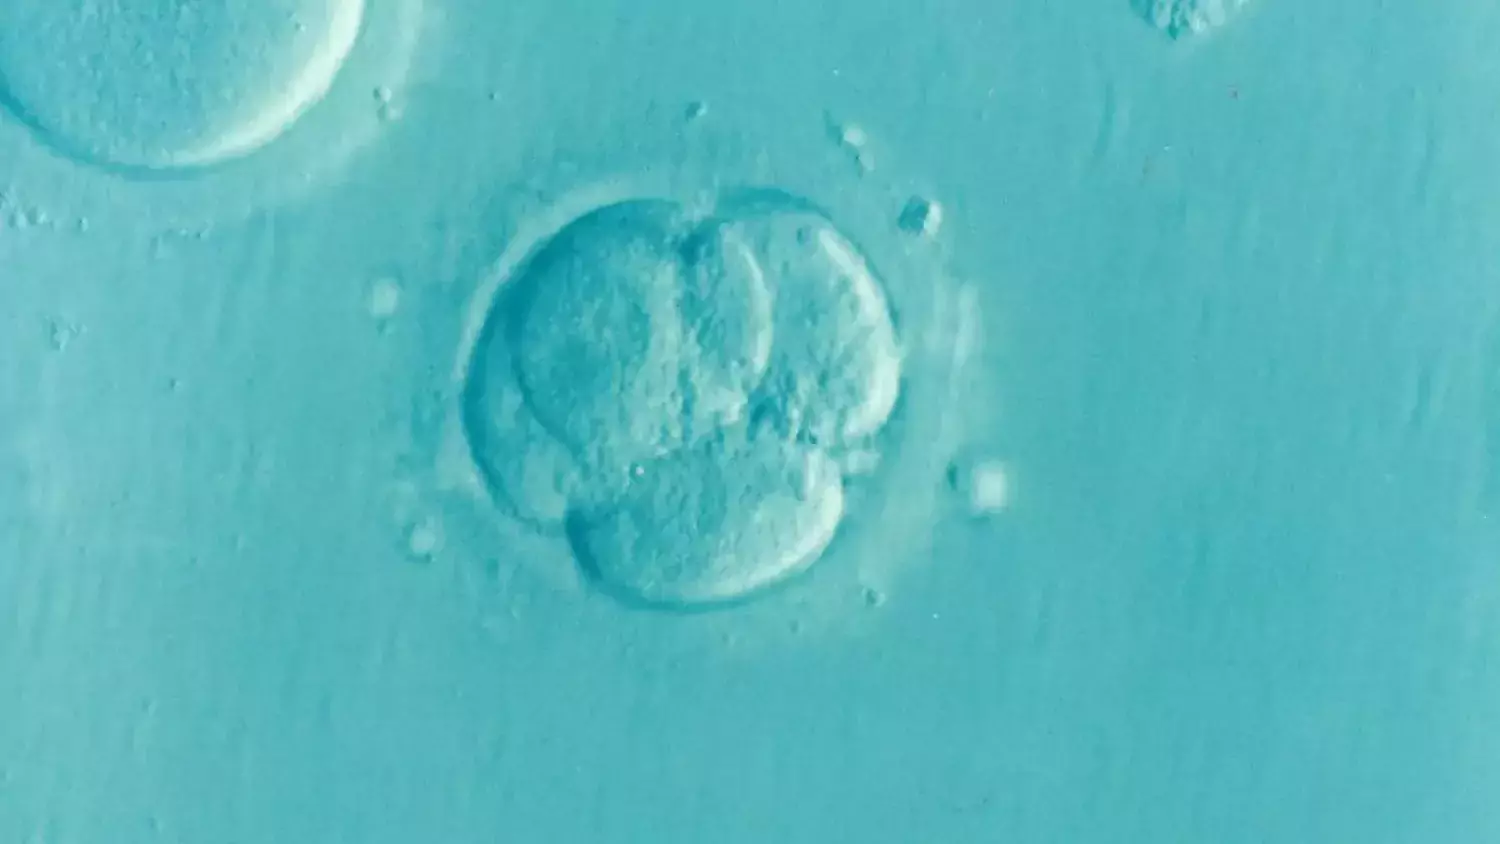 Genre image illustrating fertility/infertility